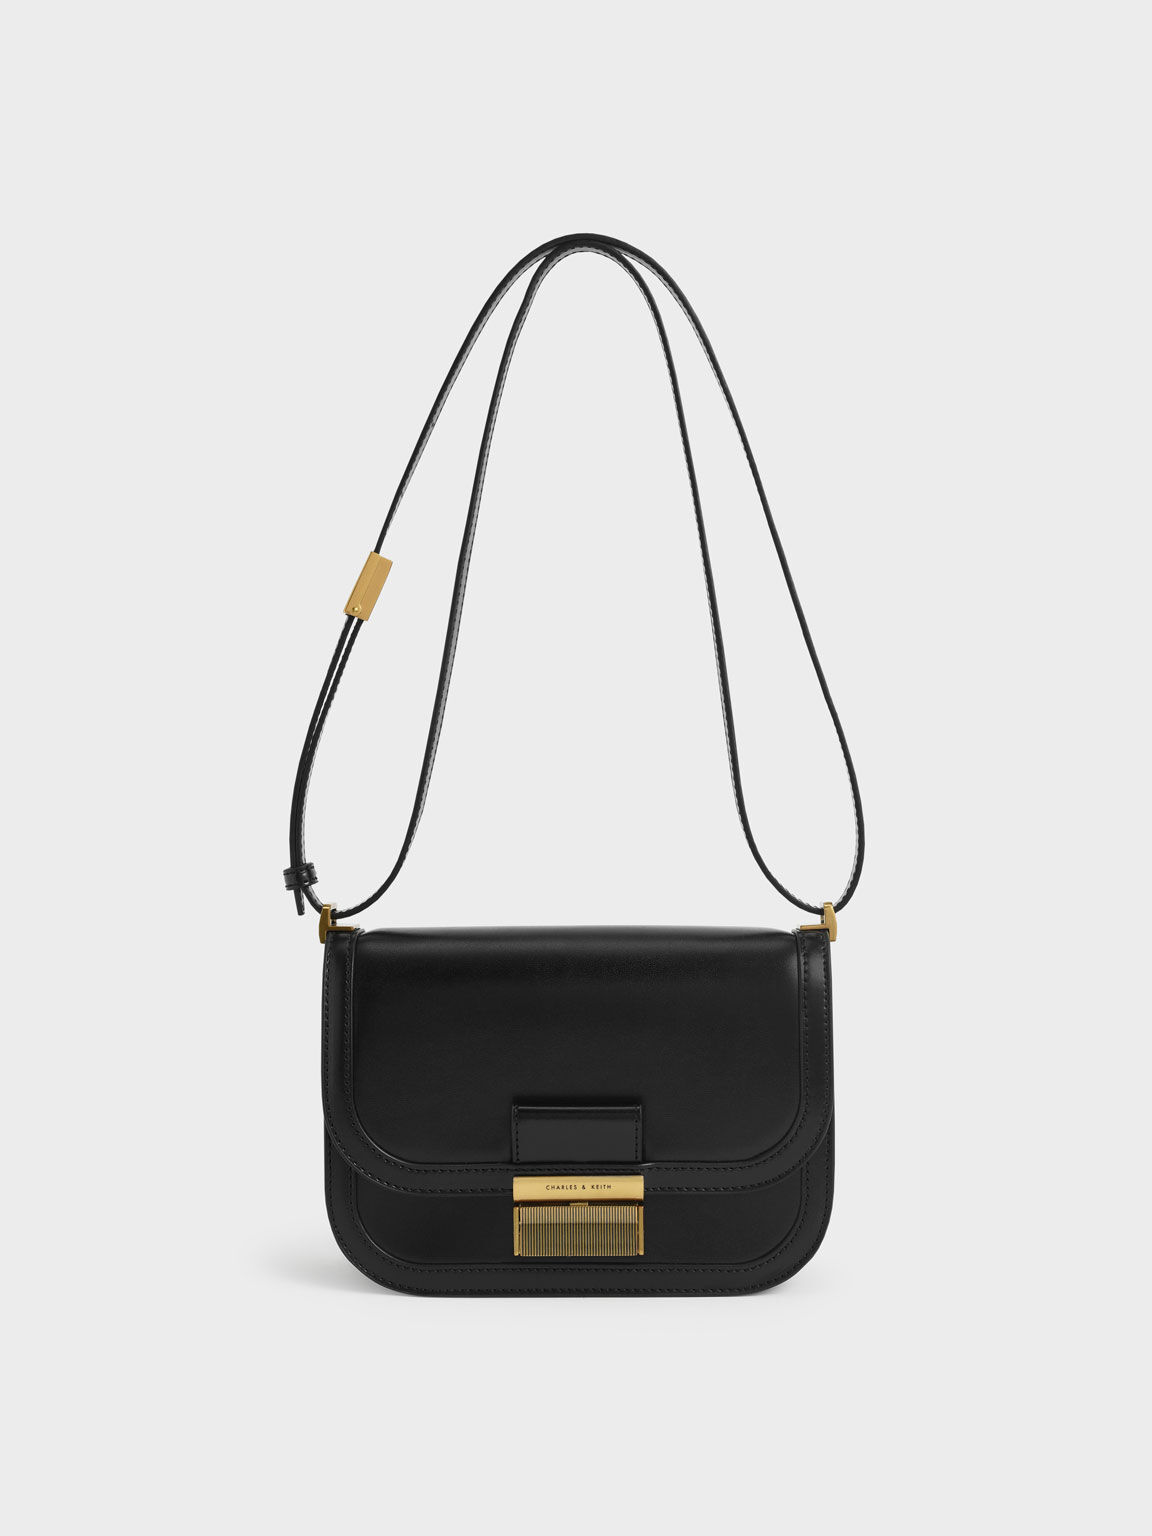 Handbags autumn winter 2015 - 60s, 70s & vintage Inspired